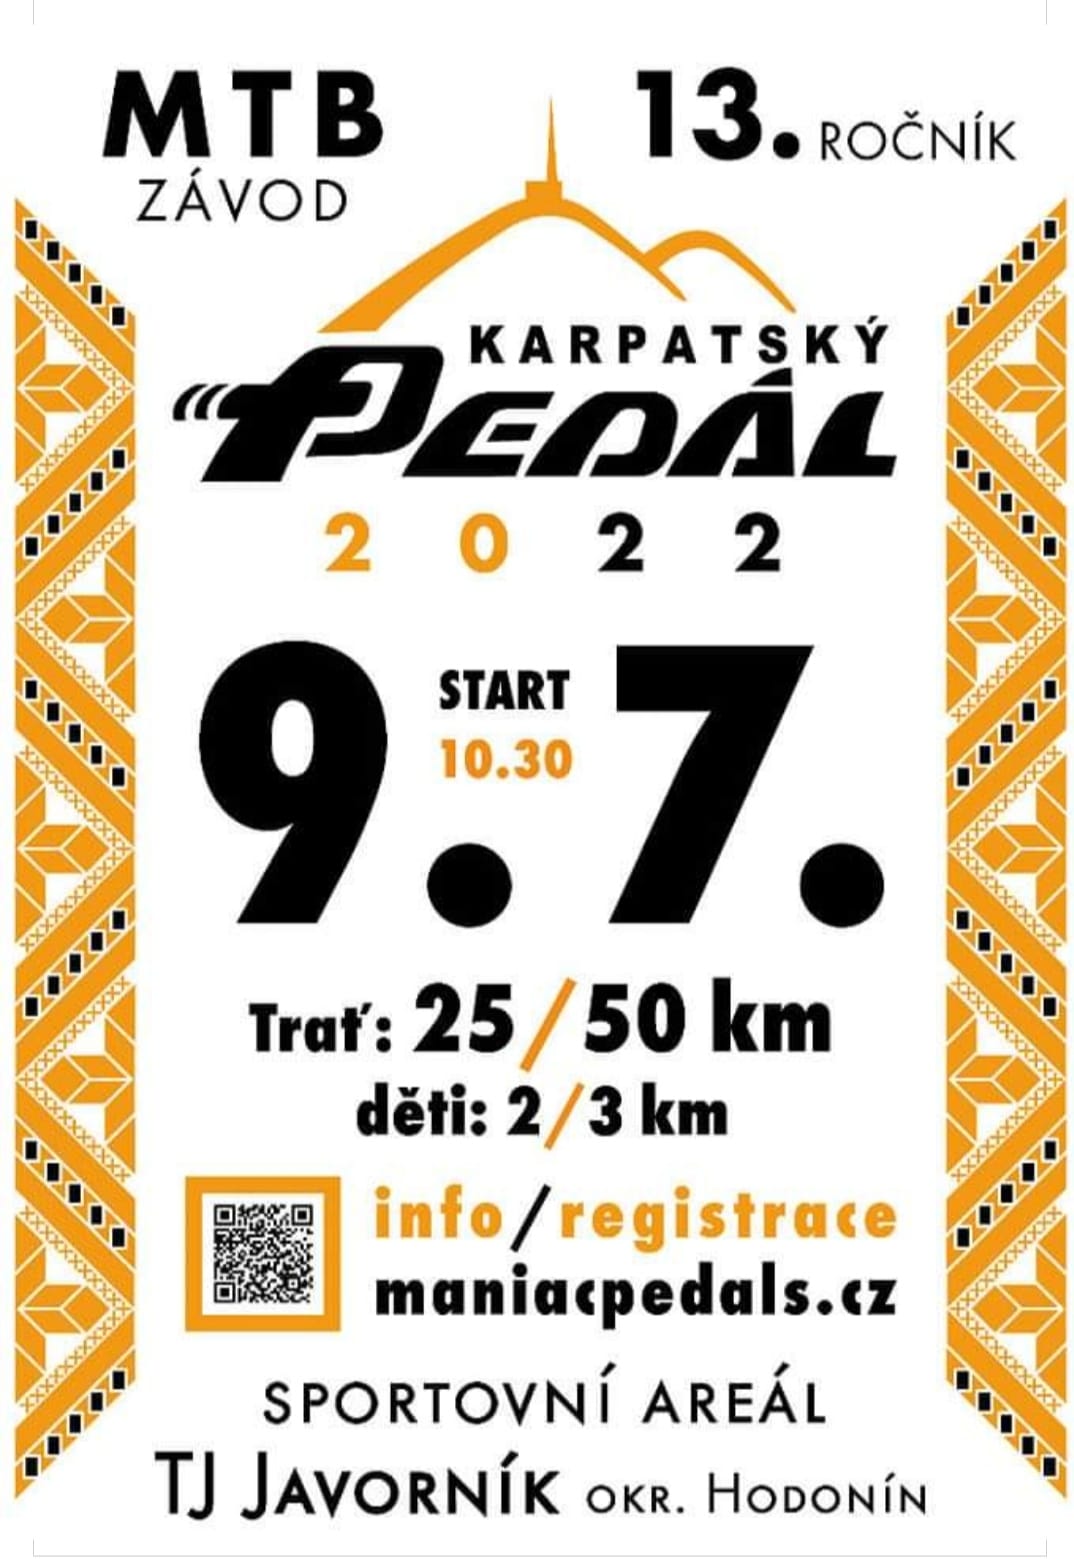 Karpatsky_pedal.jpg